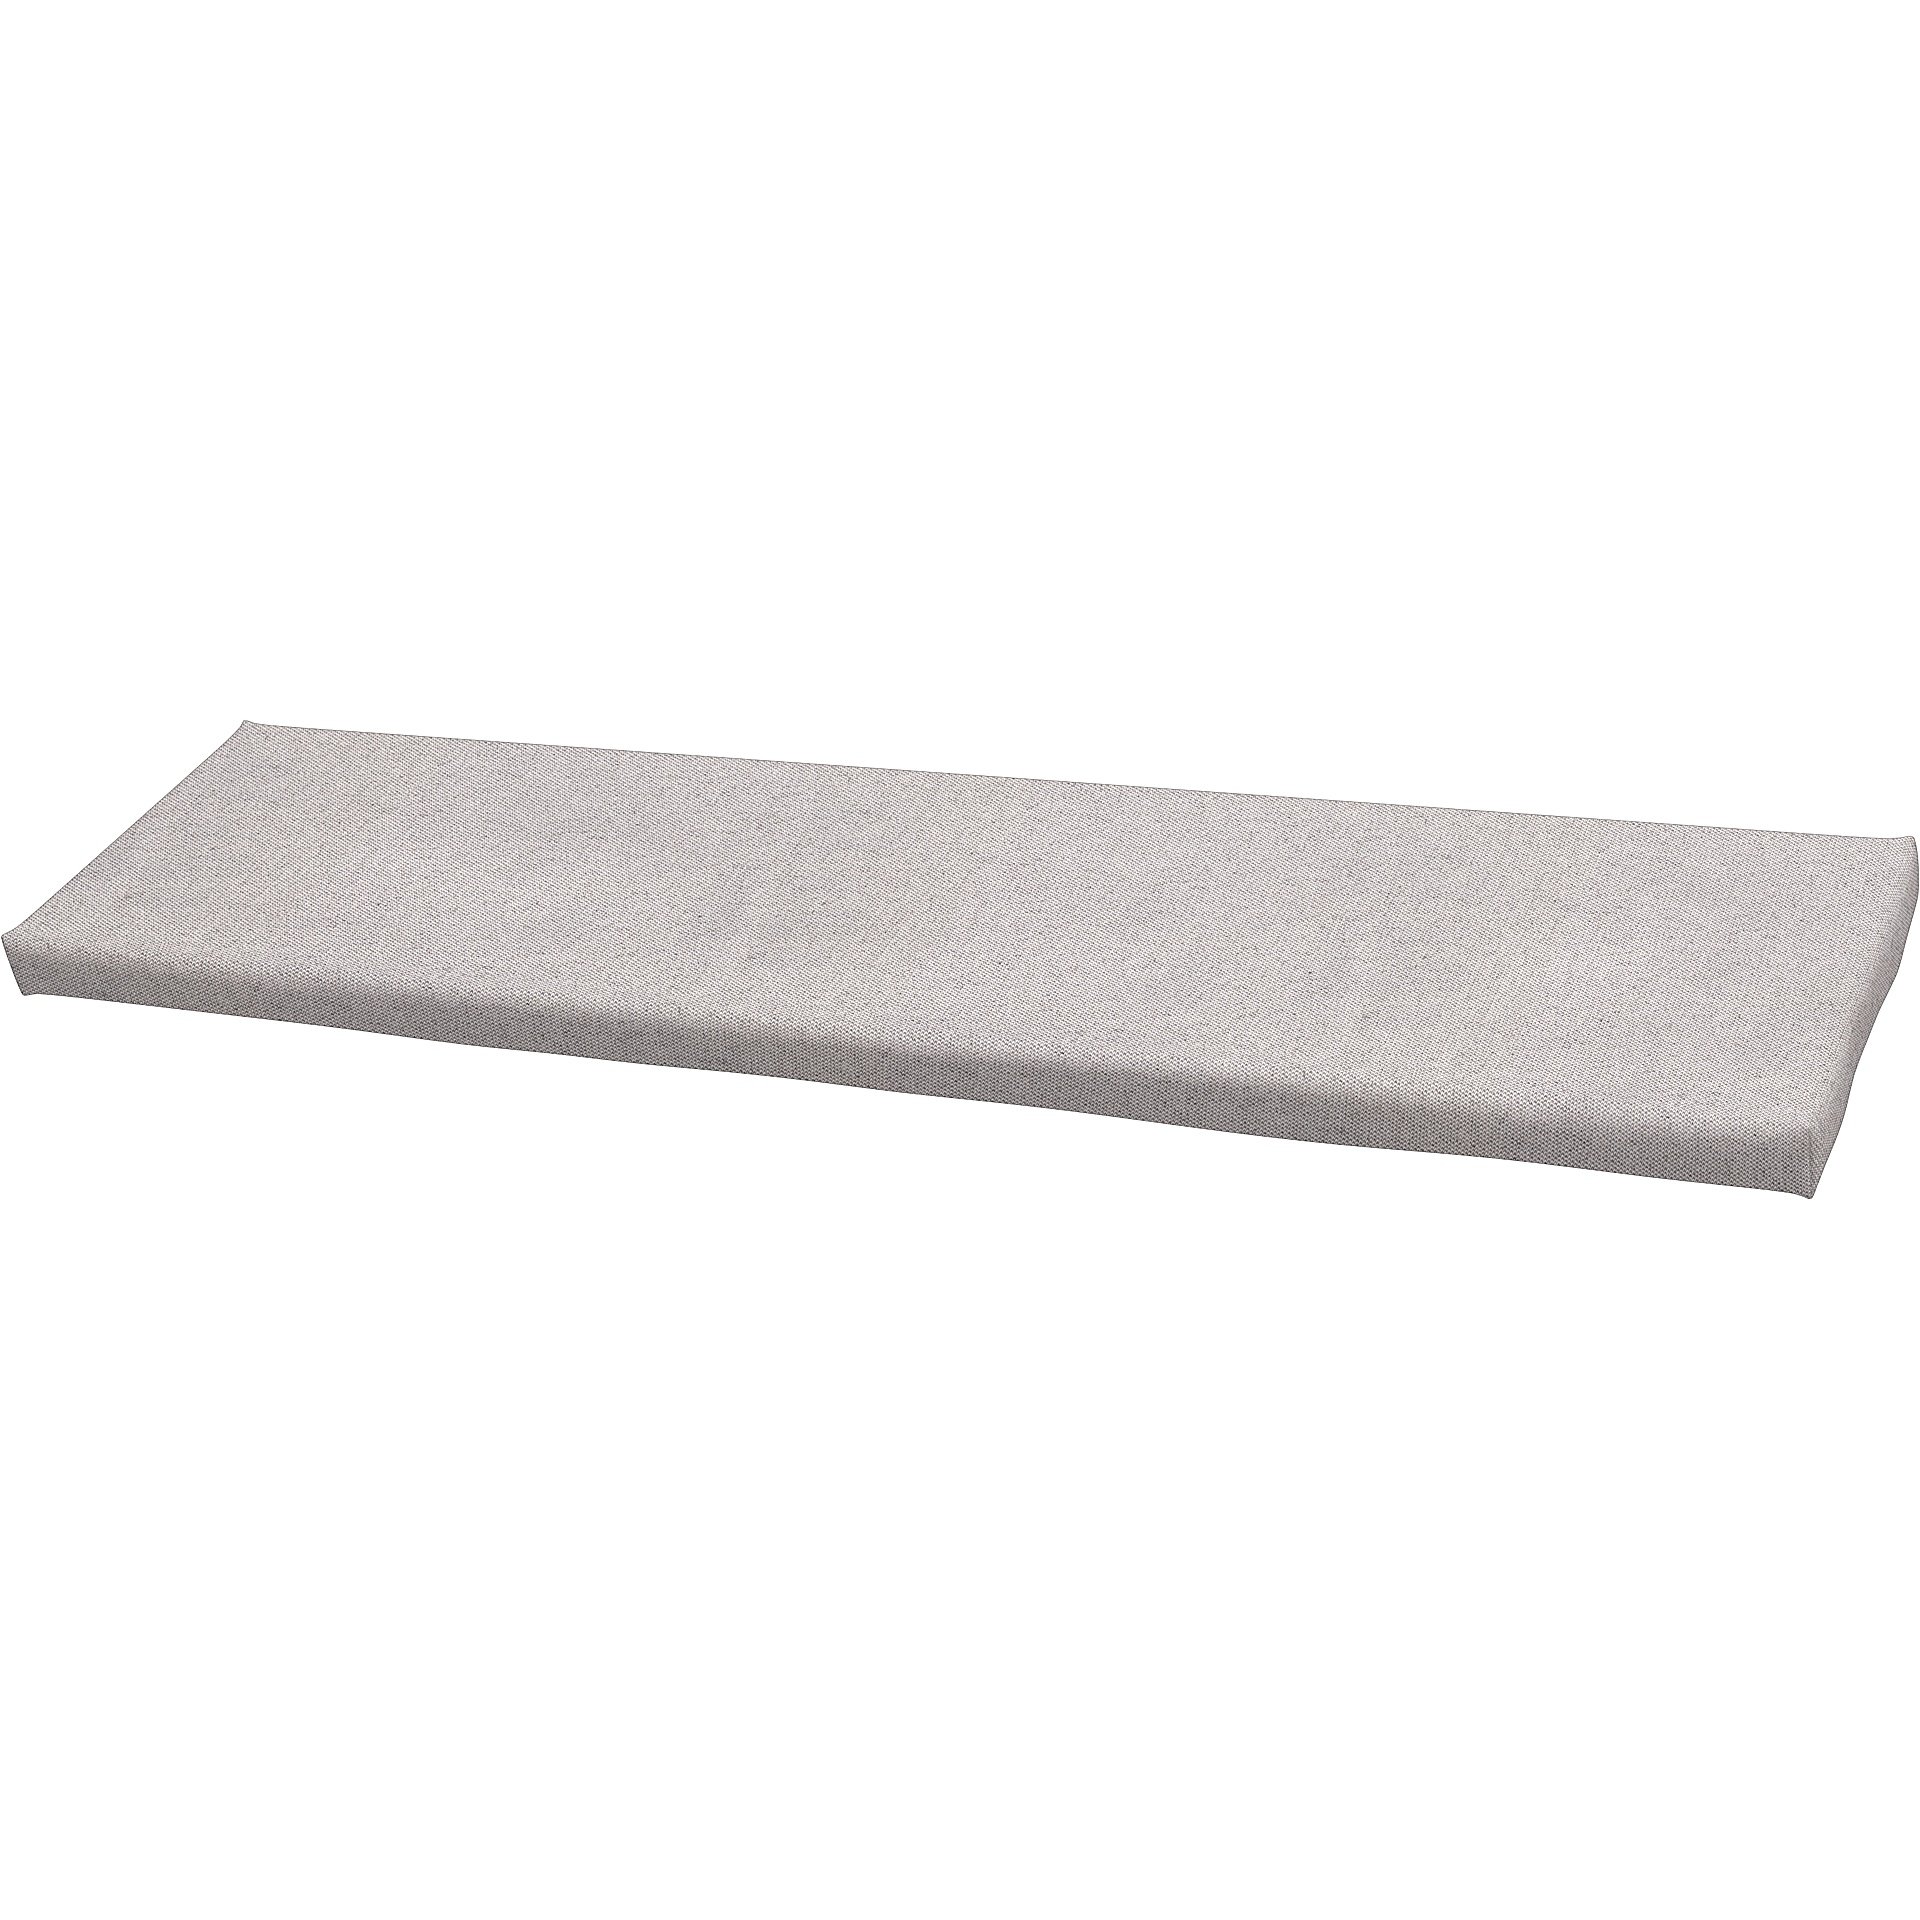 IKEA - Universal bench cushion cover 120x35x3,5 cm, Natural, Cotton - Bemz